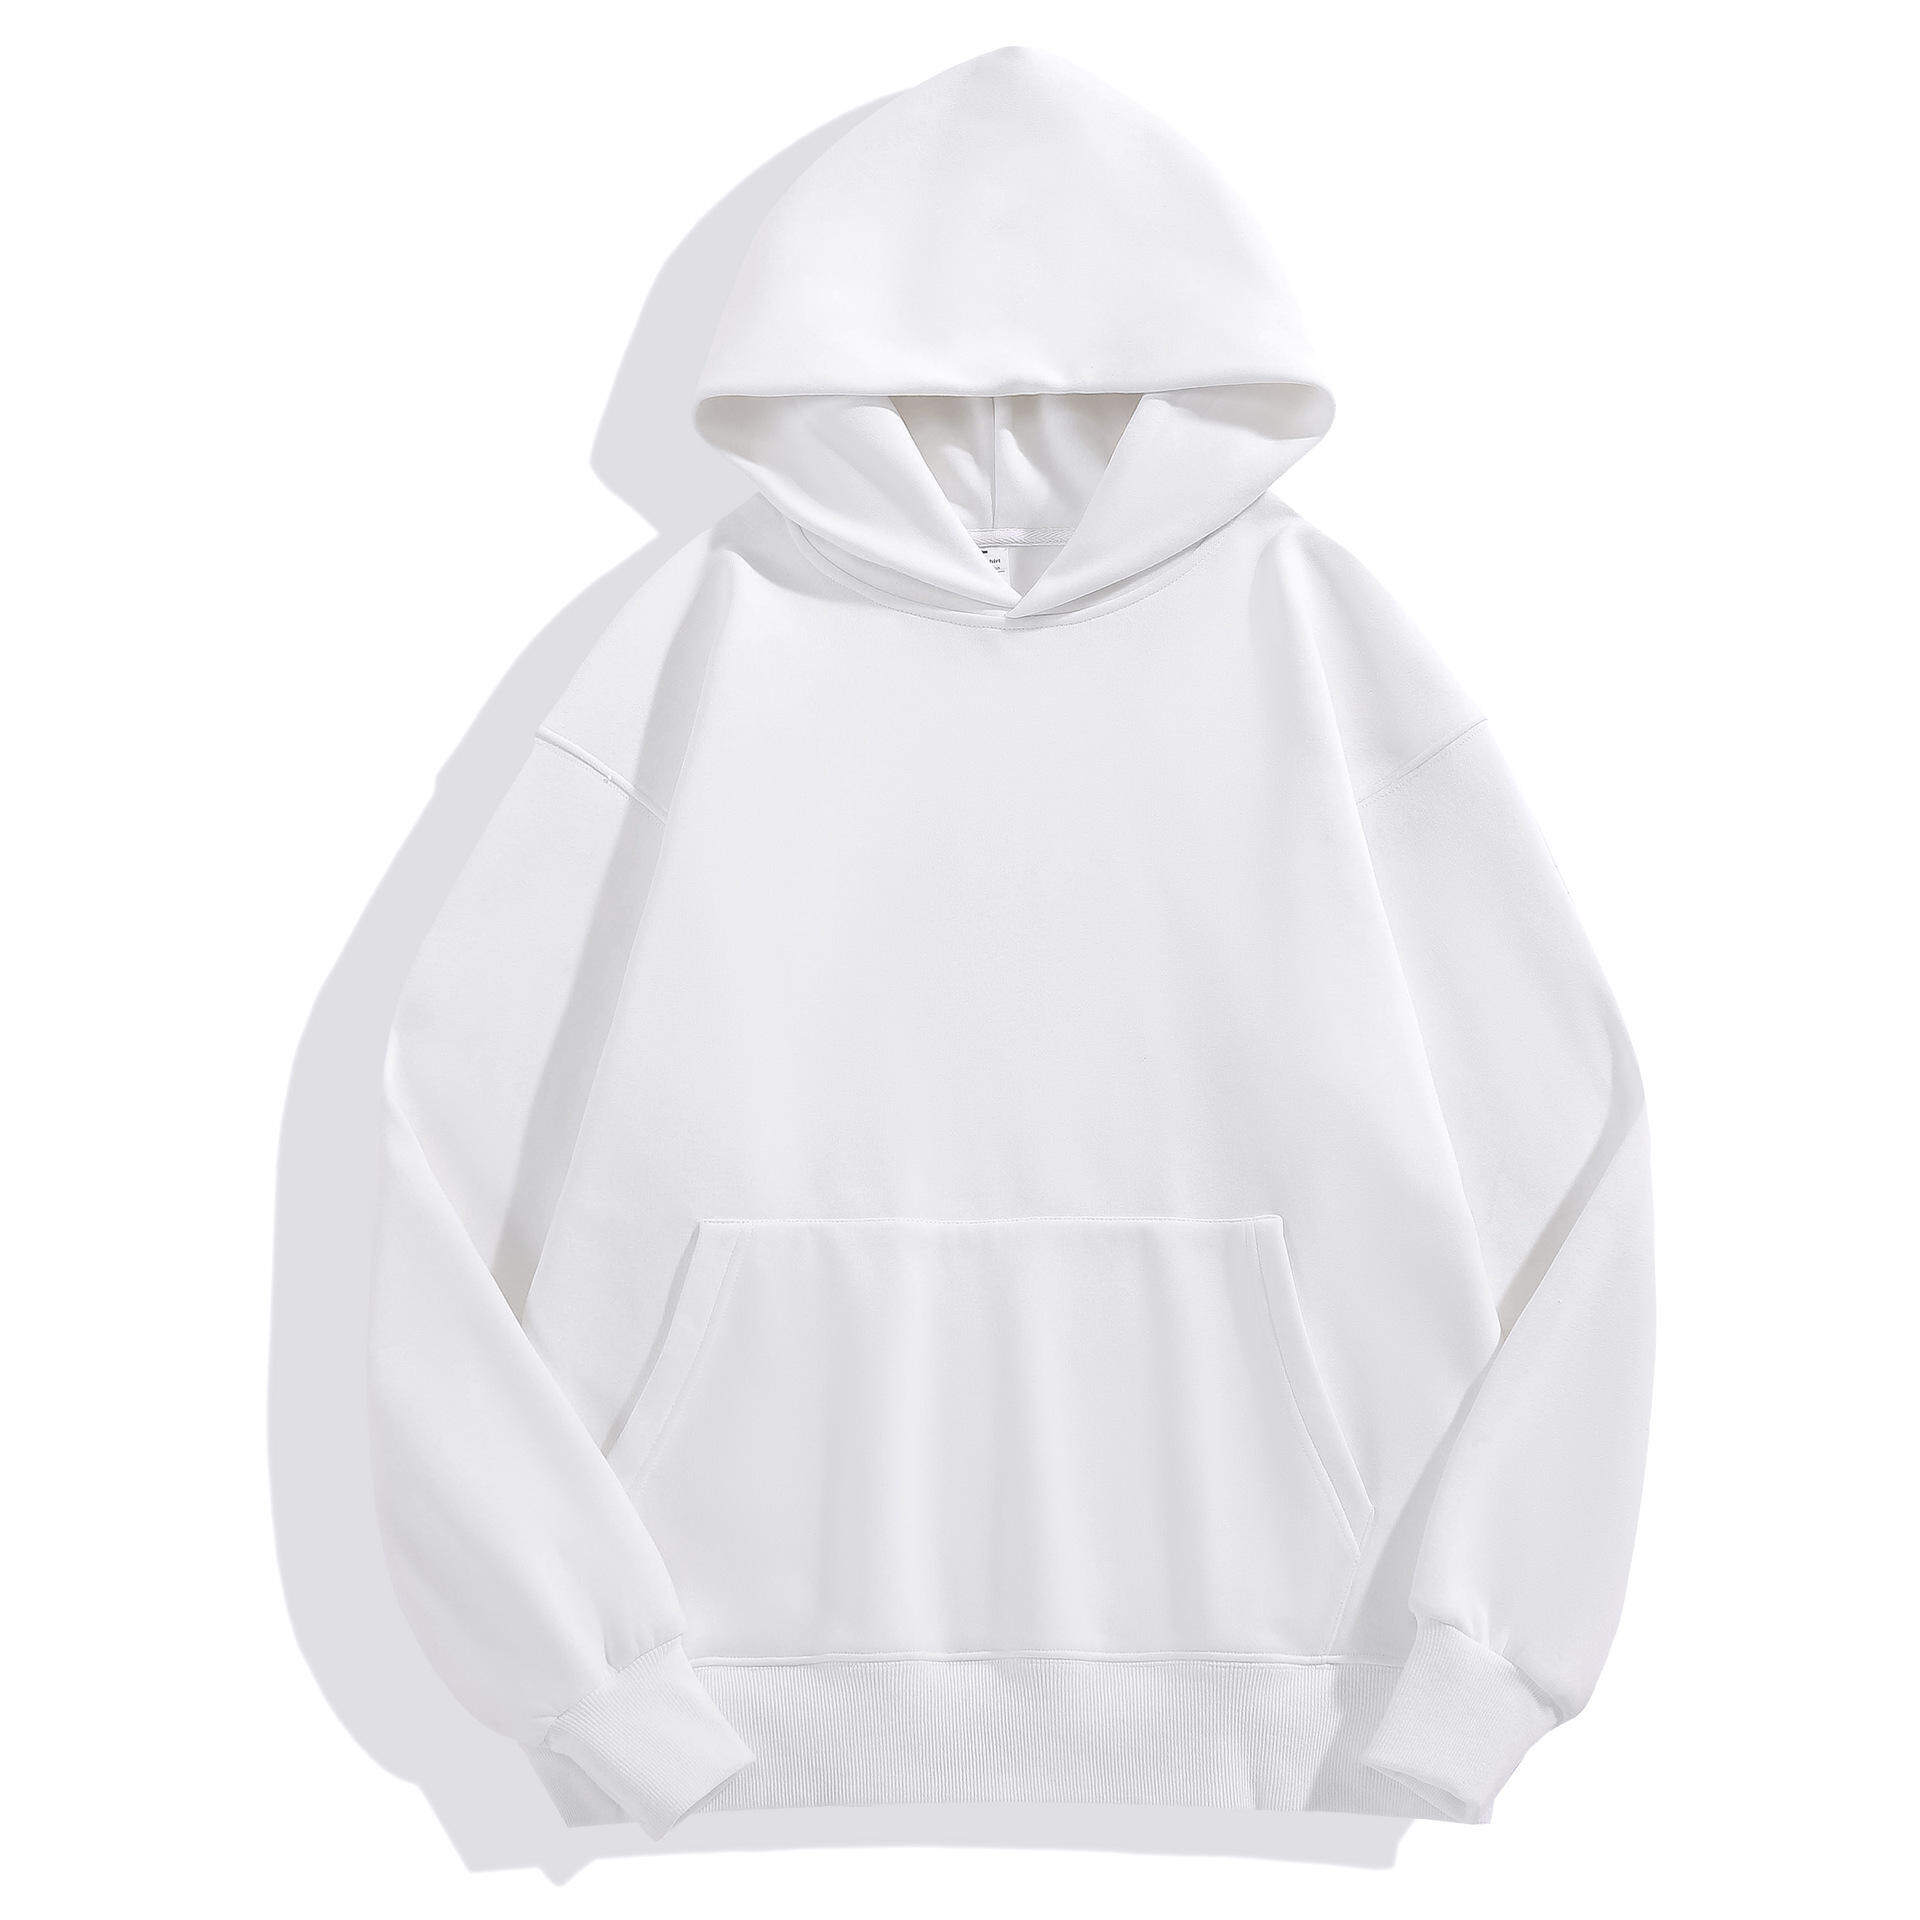 customized pullover hoodie sweatshirts, diamond supply pullover hoodie, mens pullover hoodie wholesale, plain pullover hoodies in bulk, blank pullover hoodies wholesale